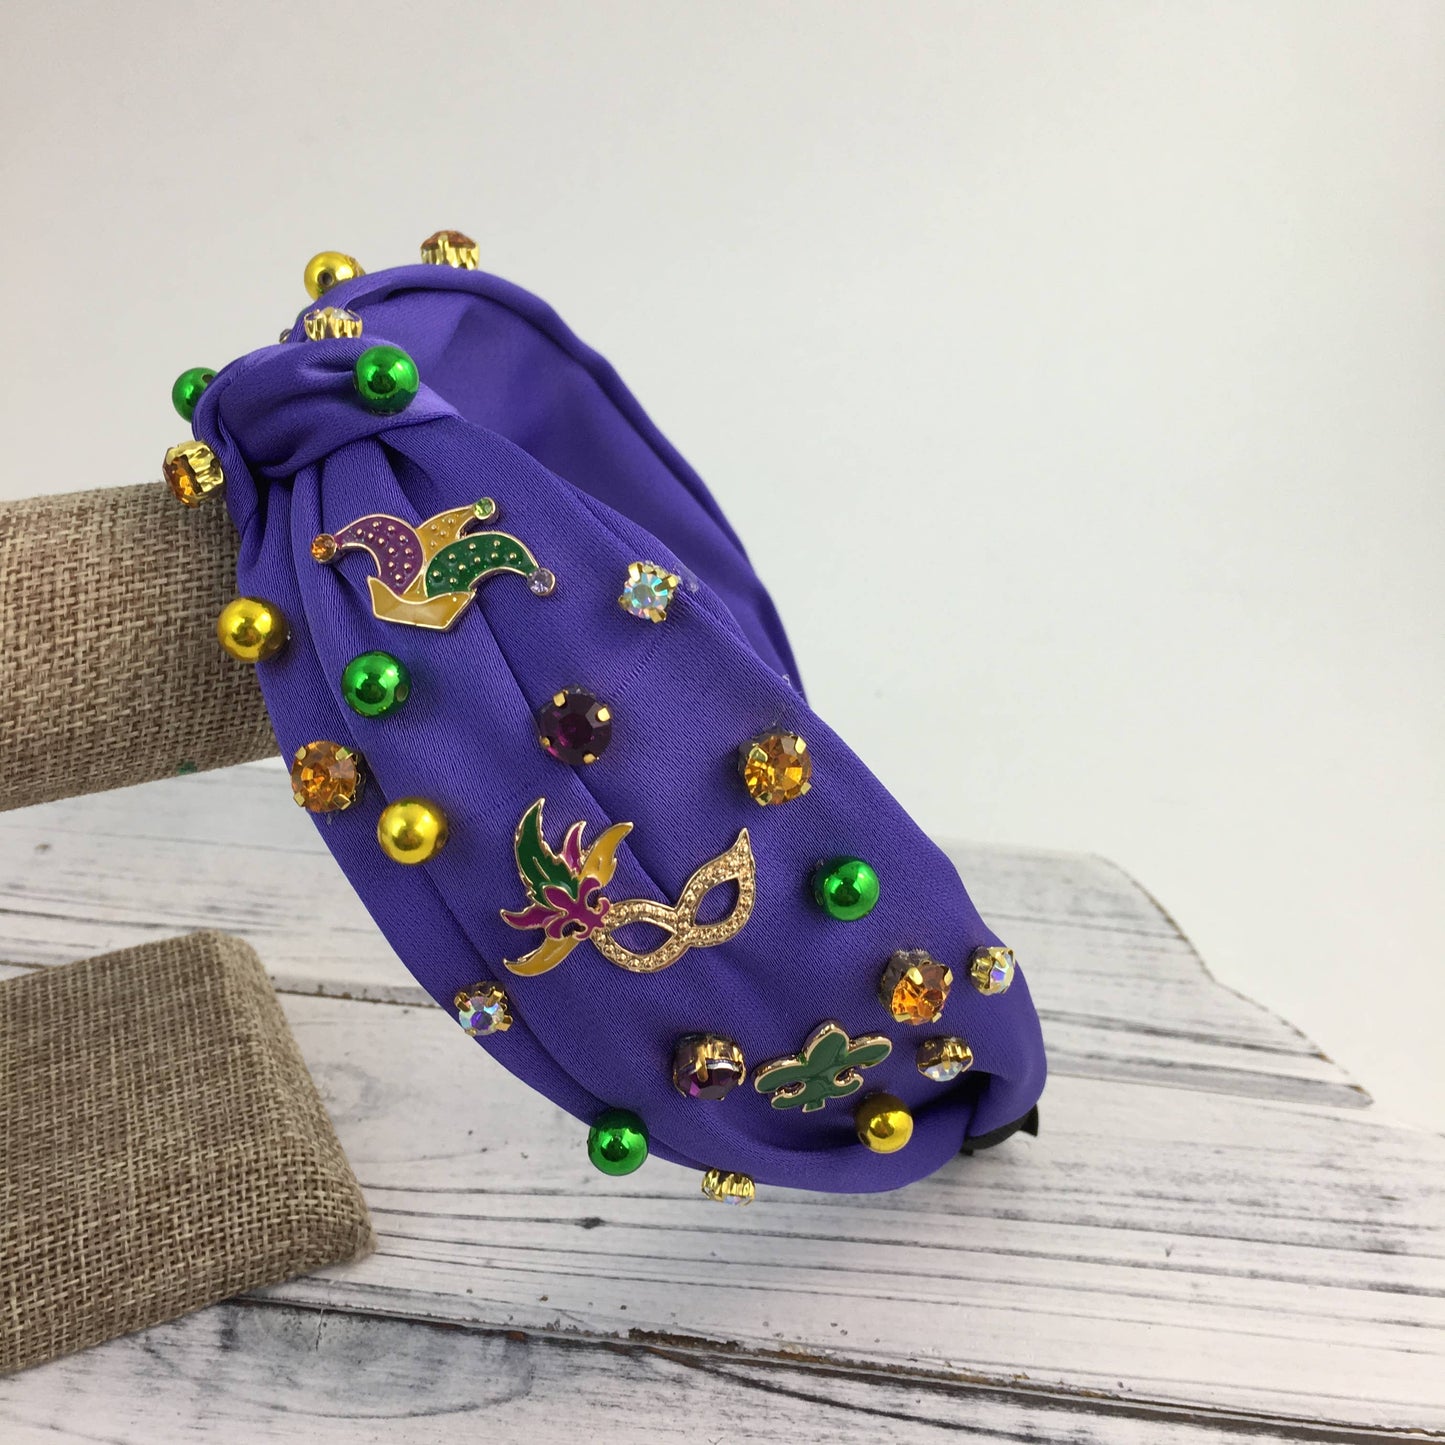 SongLily - Mardi Gras purple headband with charms